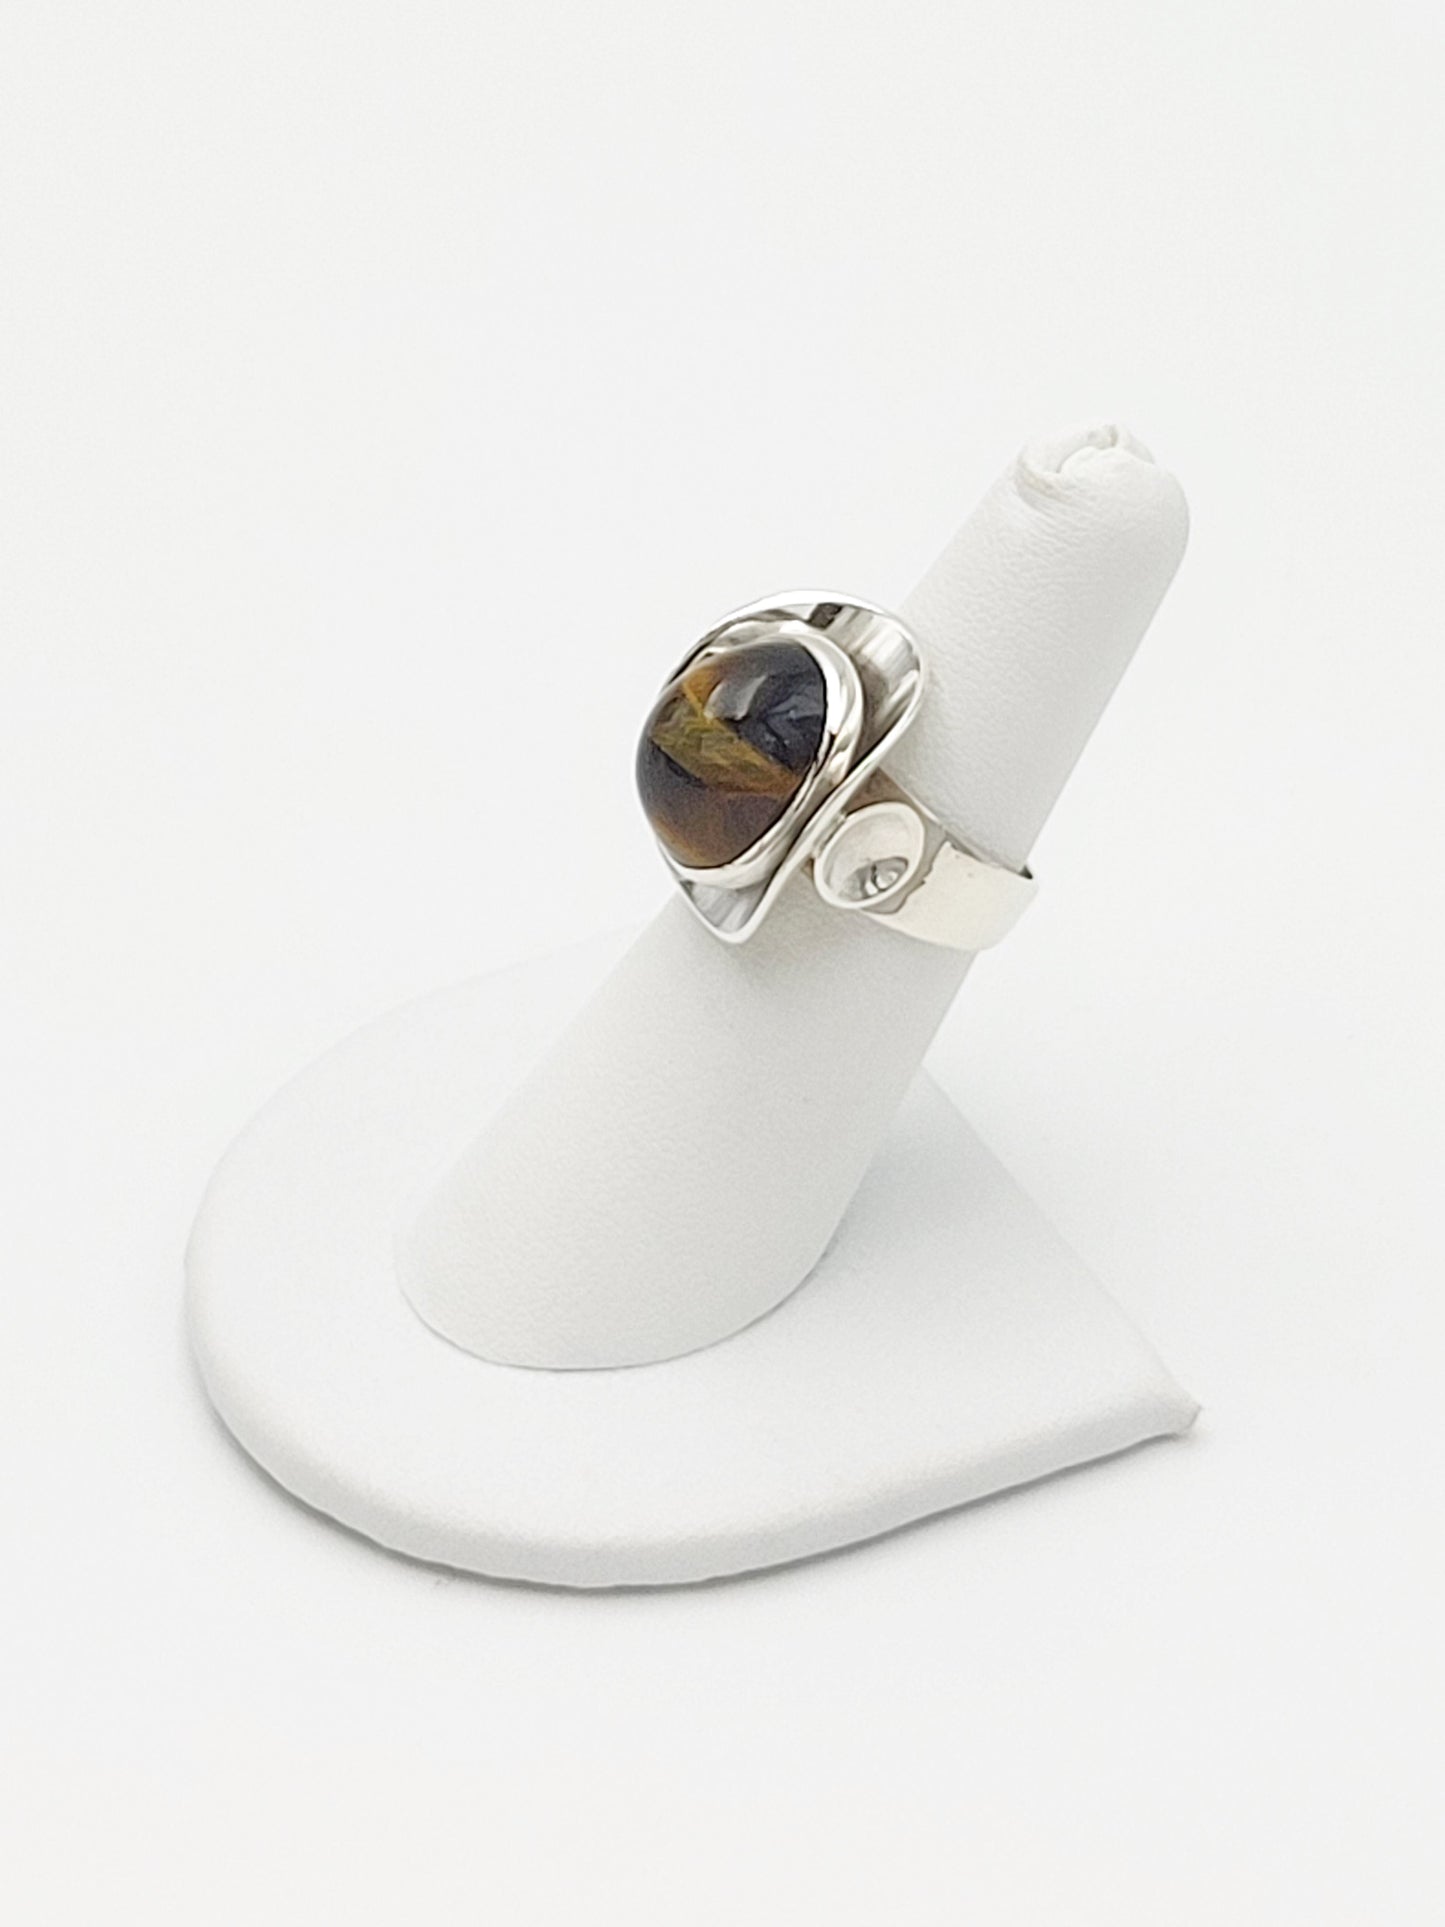 WWL Jewelry Designer WWL Sterling Silver & Tiger's Eye Modernist Ring Mid-20th Century